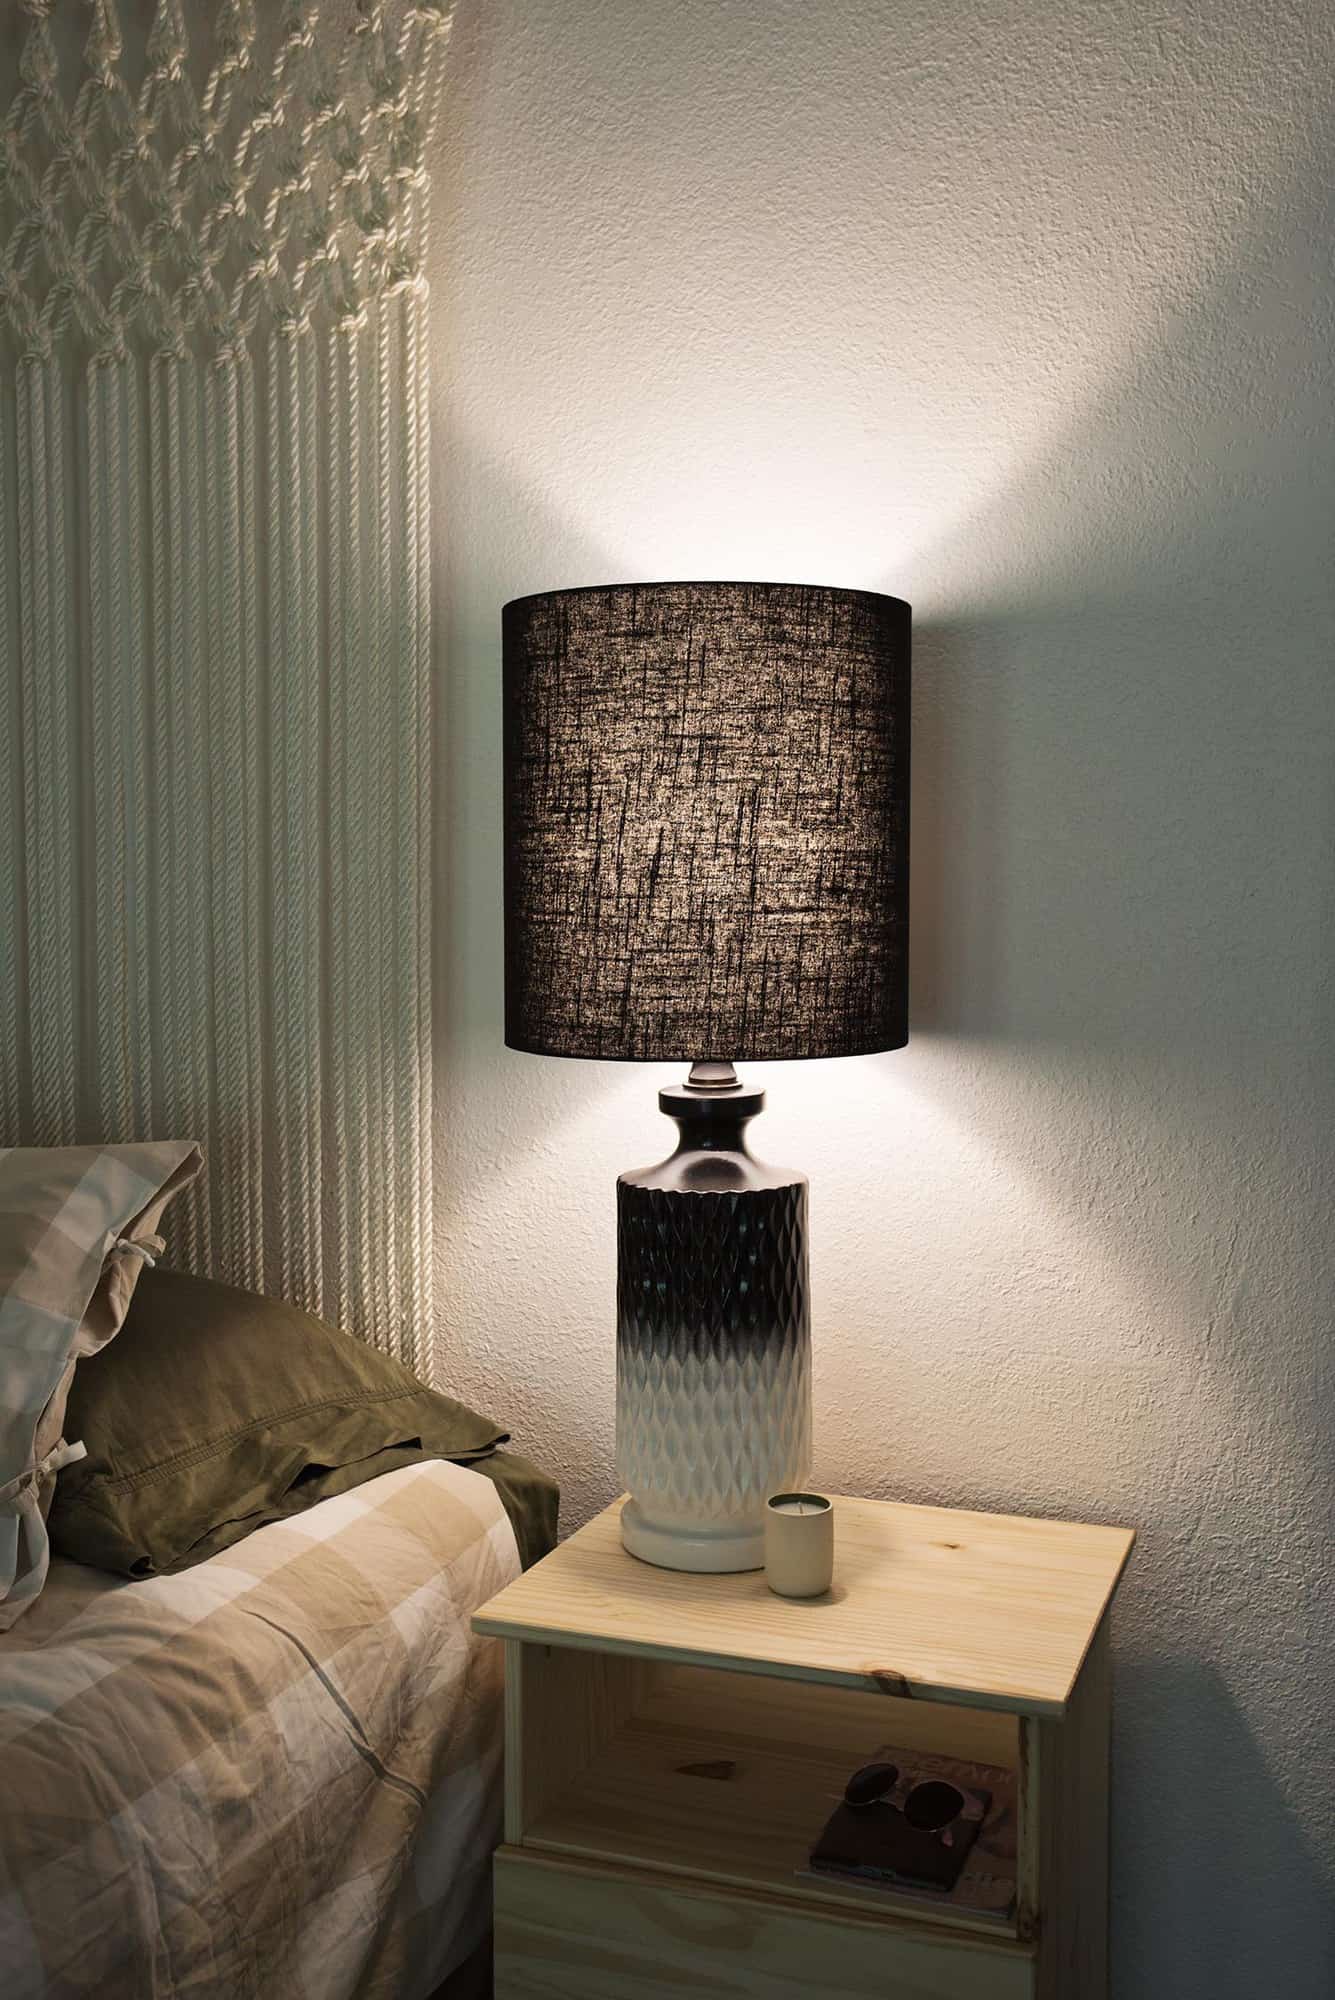 Lamp In Bedroom: Illuminating The Night